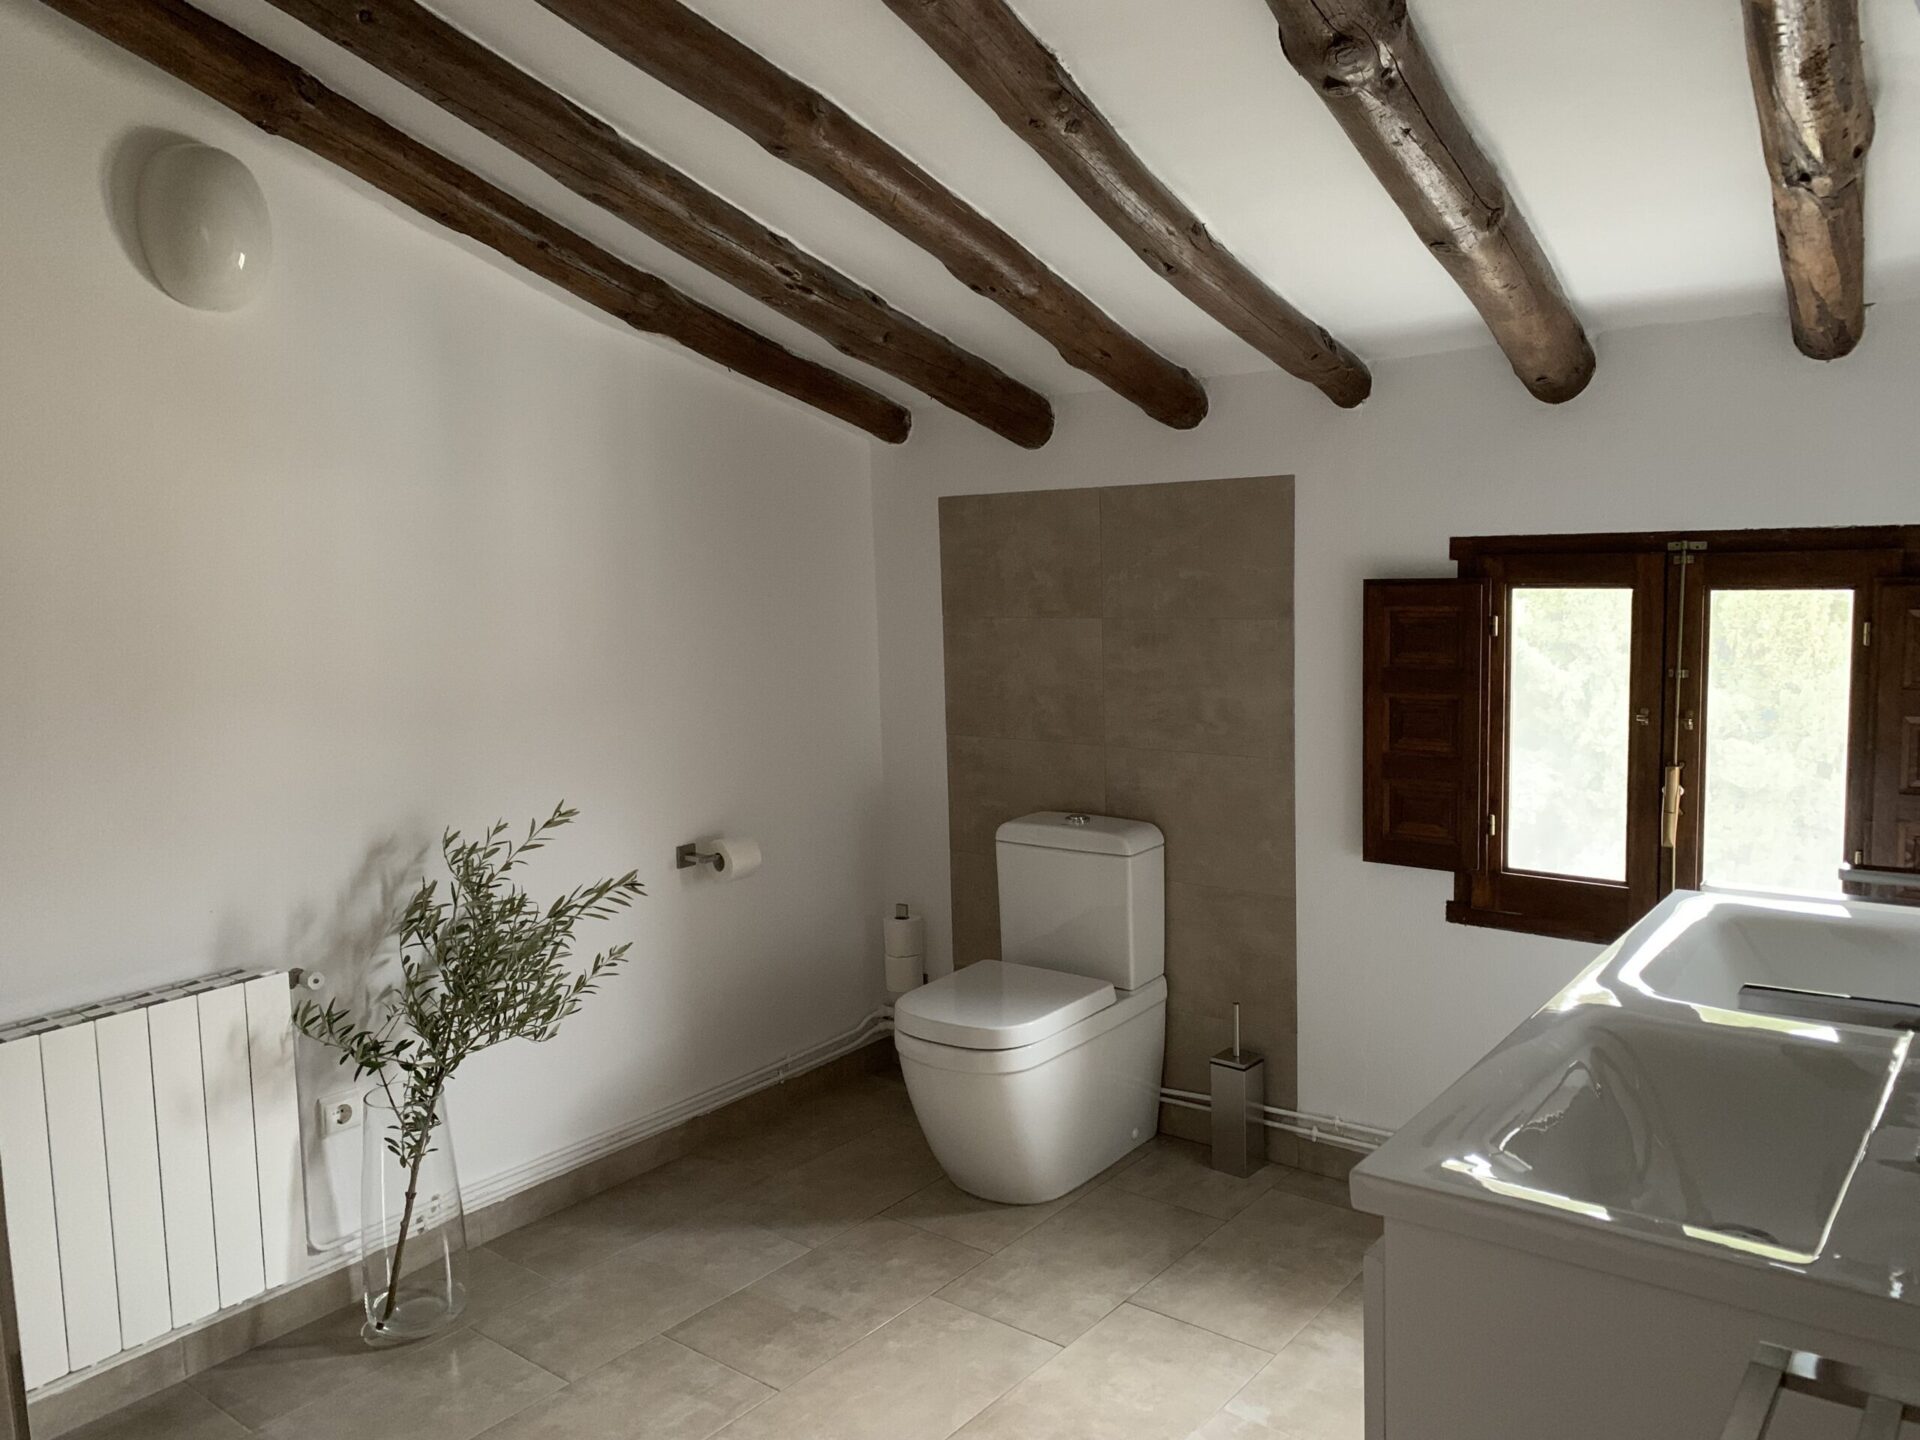 II - Bathroom Casa Paco